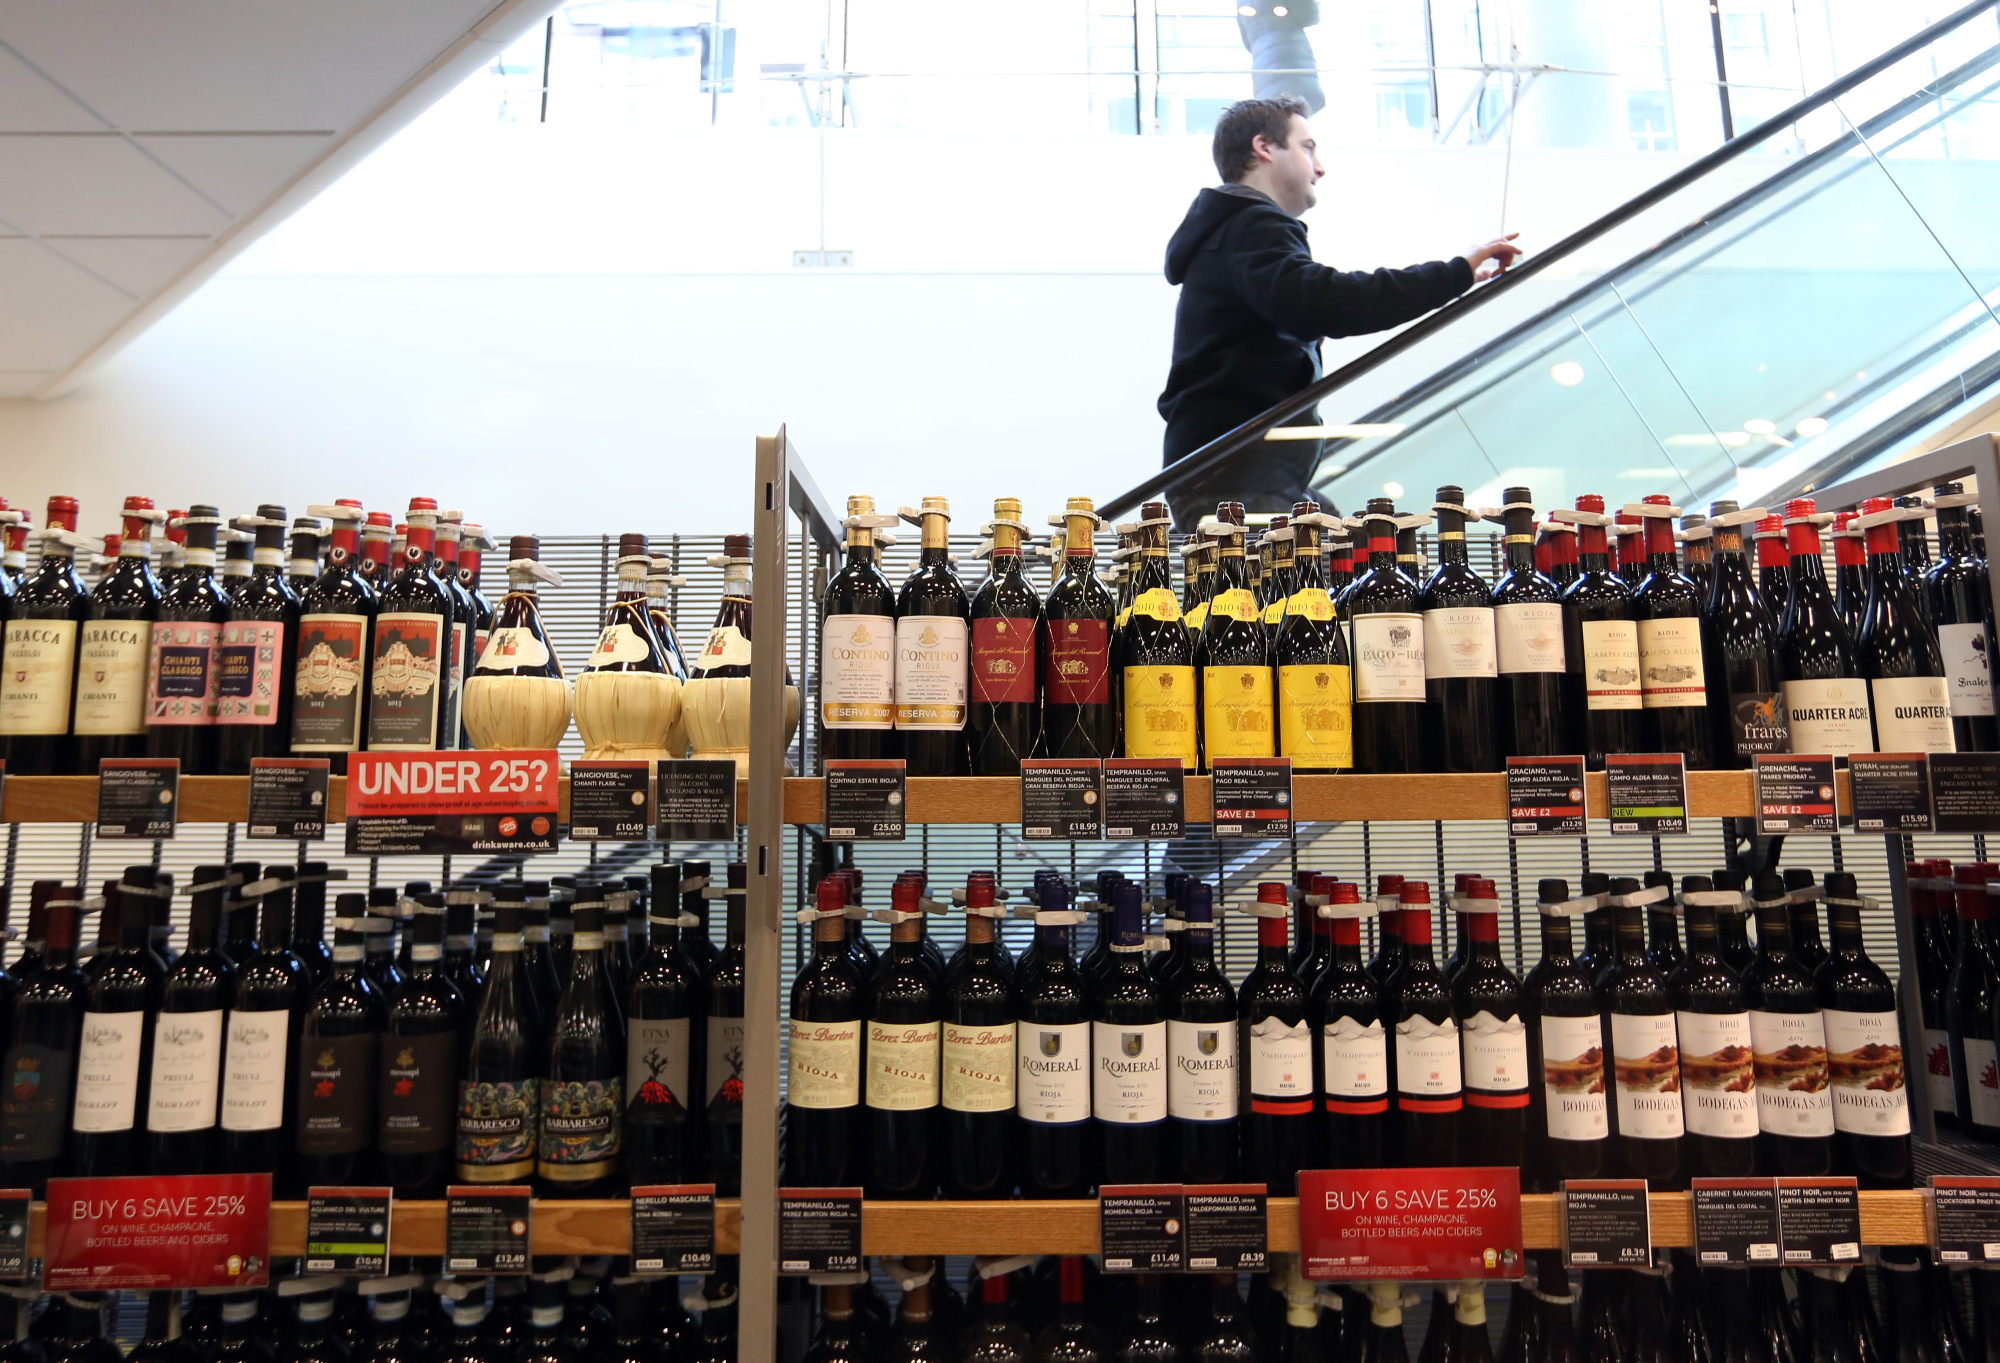 A customer ascends an escalator behind a shelf displaying bottles of wine in a supermarket.&nbsp;